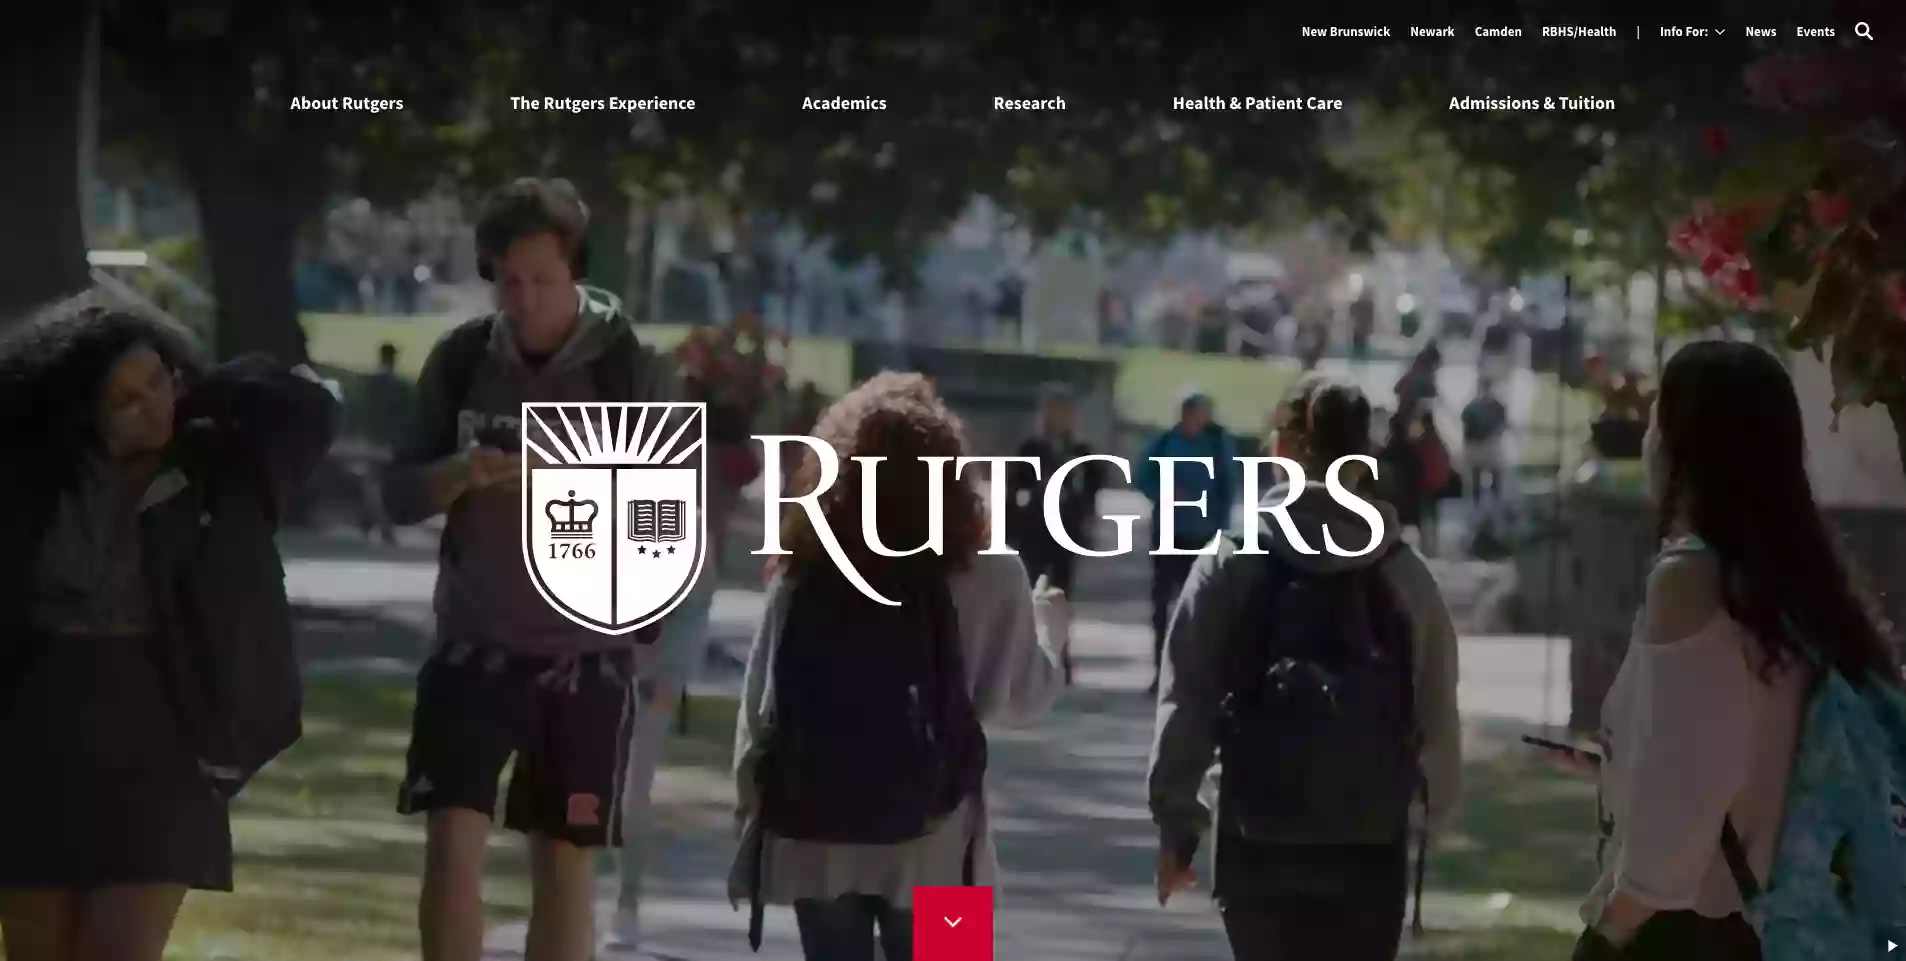 Rutgers State University